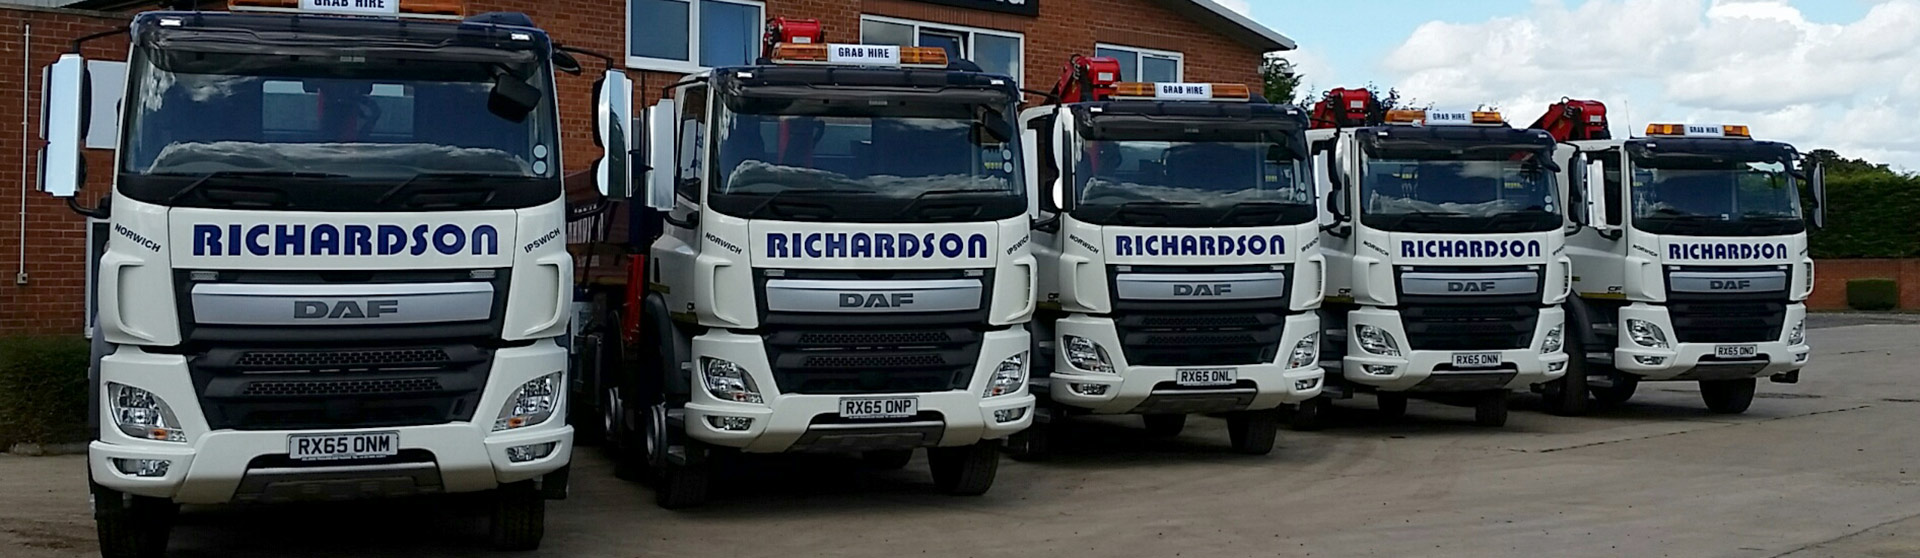 Grab Hire Lorries in Suffolk and Norfolk